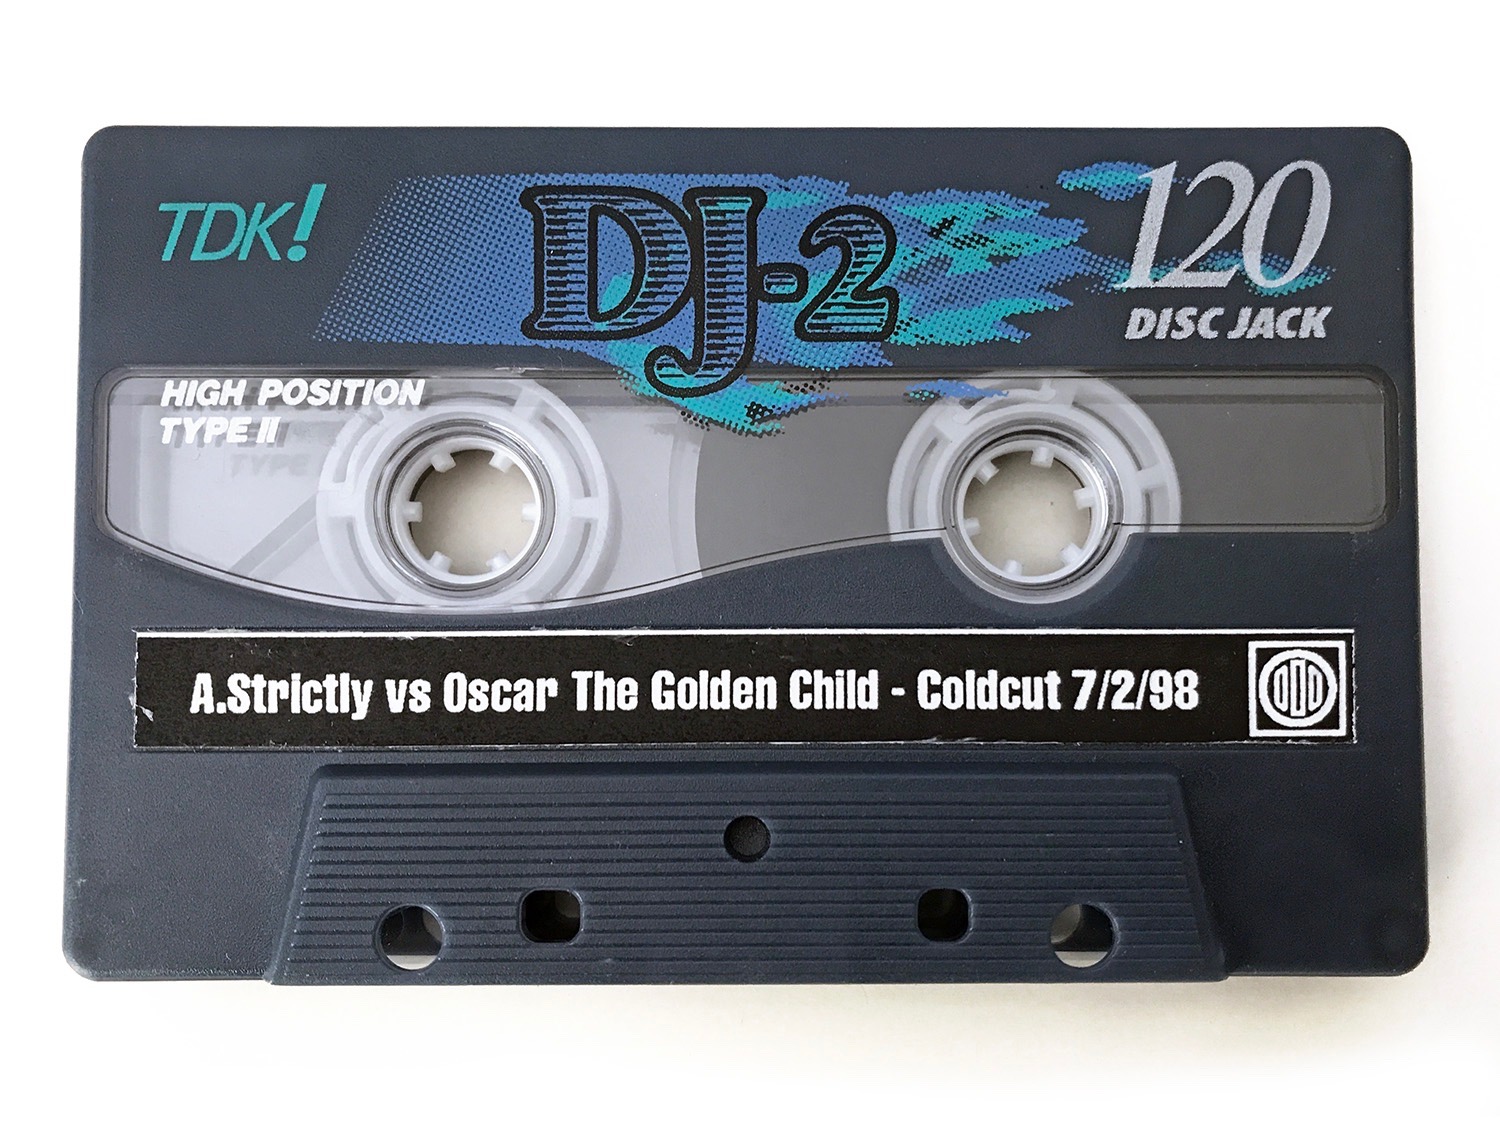 MS111 Tape